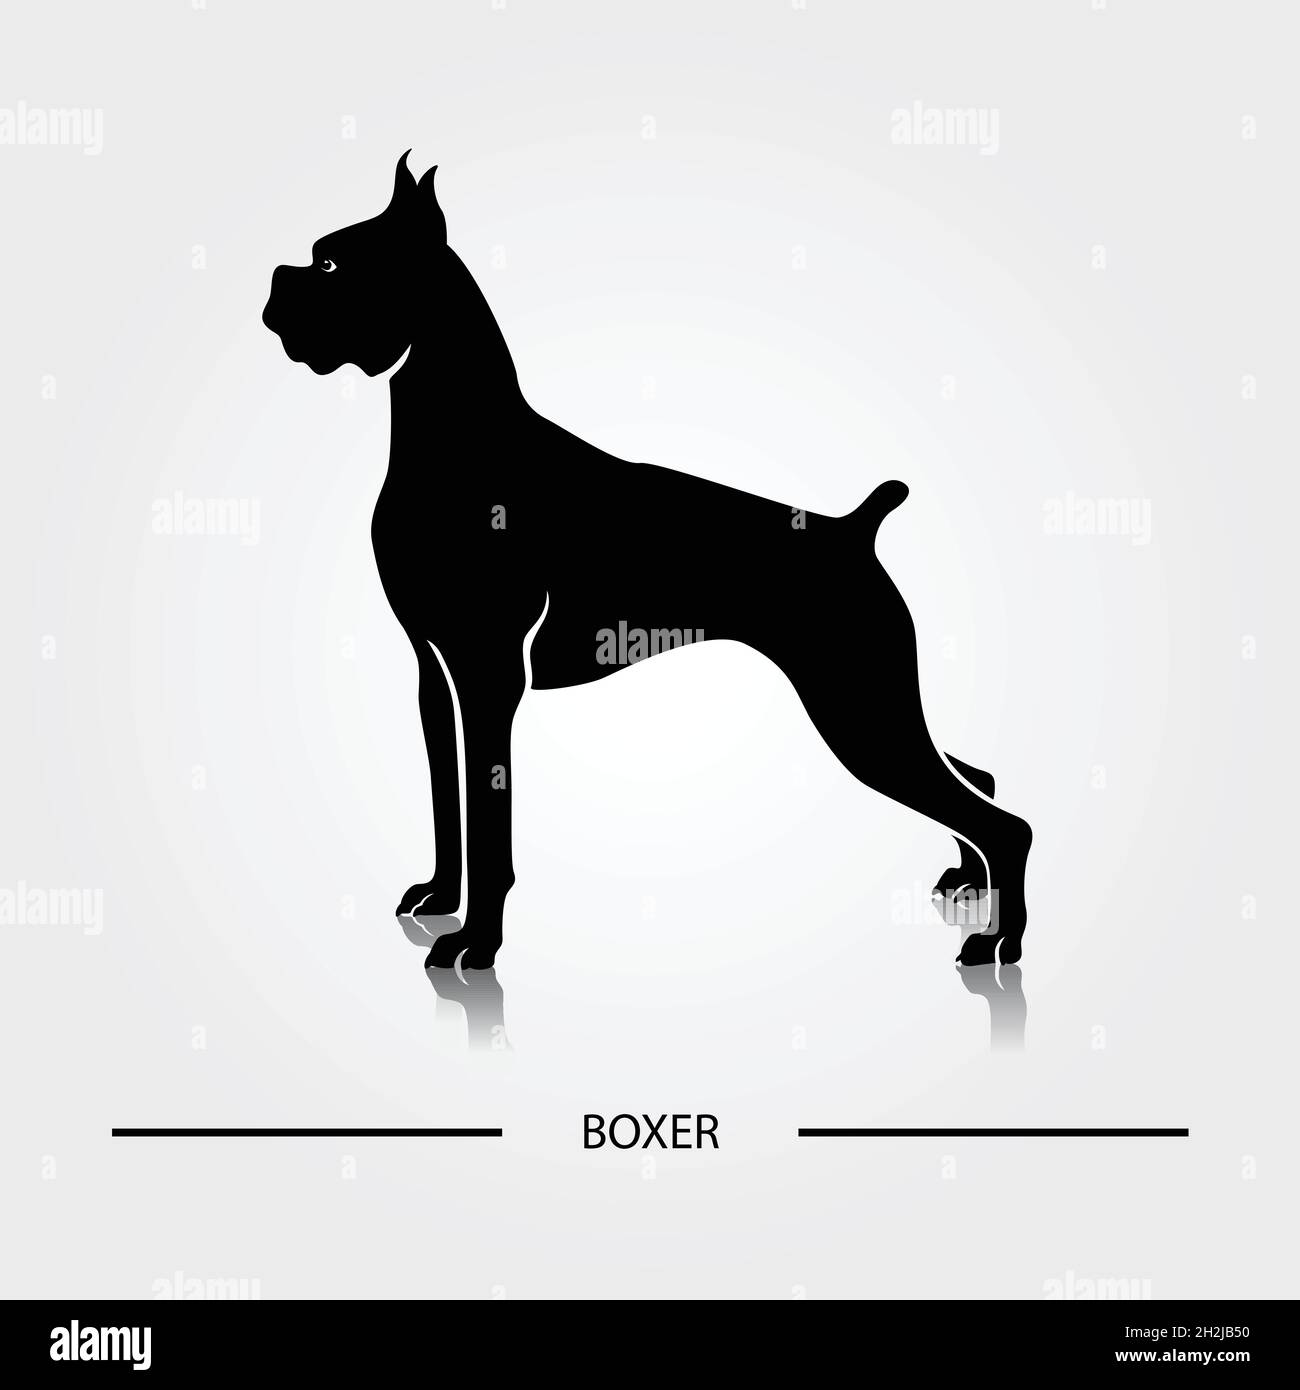 Boxer Hund Silhouette Vektor Illustration. Schwarze Silhouetten von Hunderassen. Stock Vektor